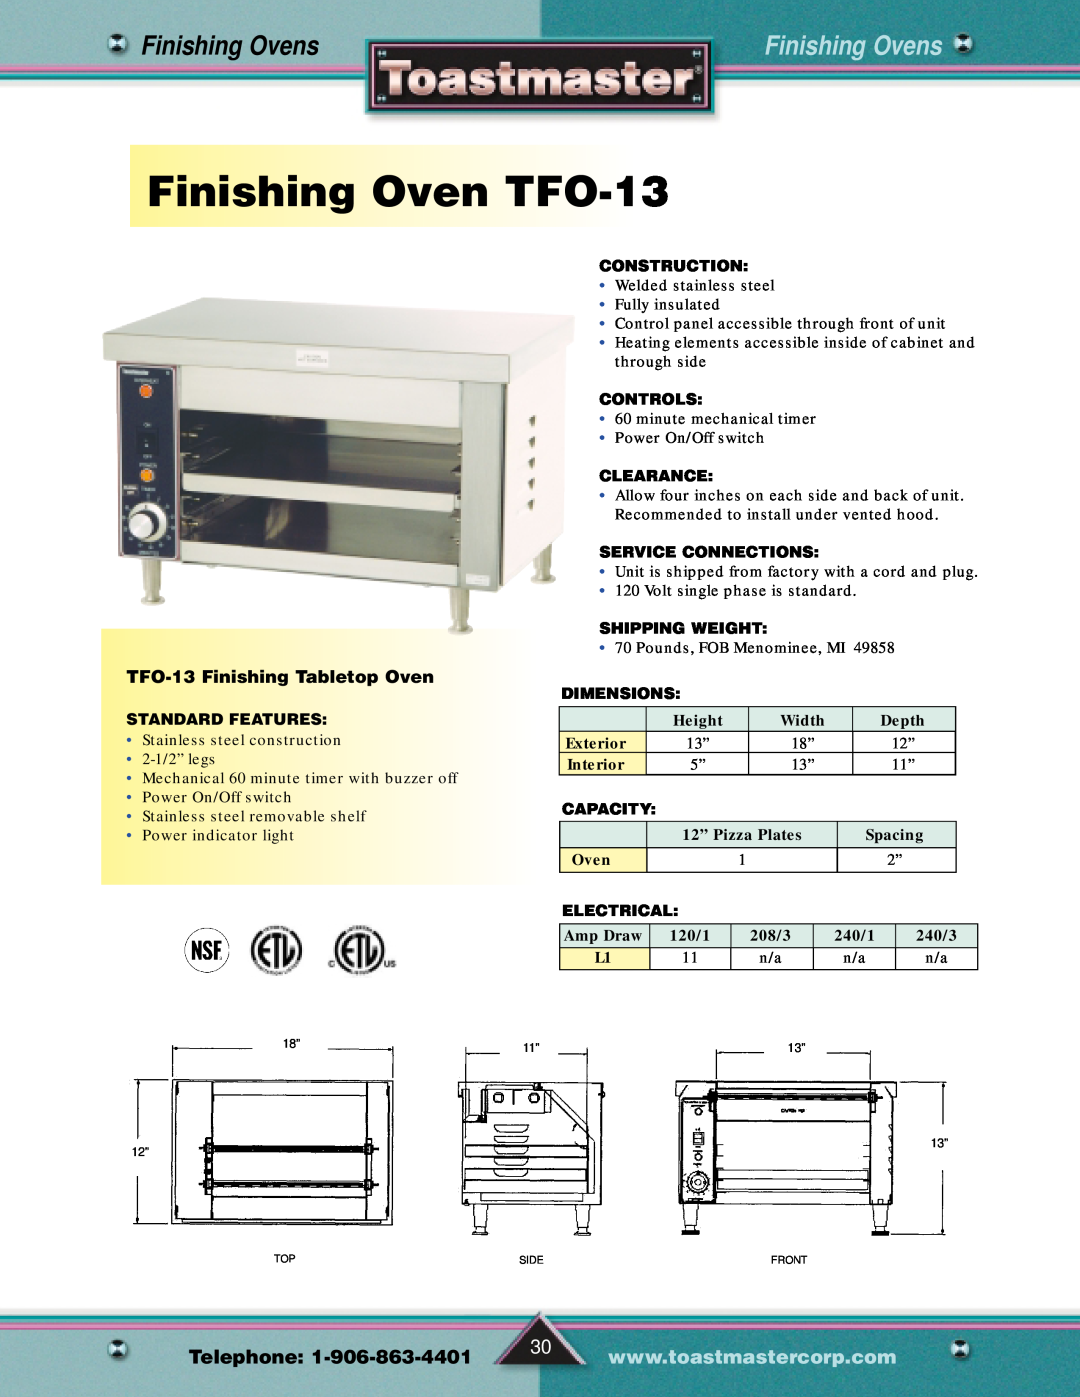 Toastmaster Gas & Electric Fryer manual FinishingOvenTFO-13, TFO-13 Finishing Tabletop Oven, Finishing Ovens, Telephone 